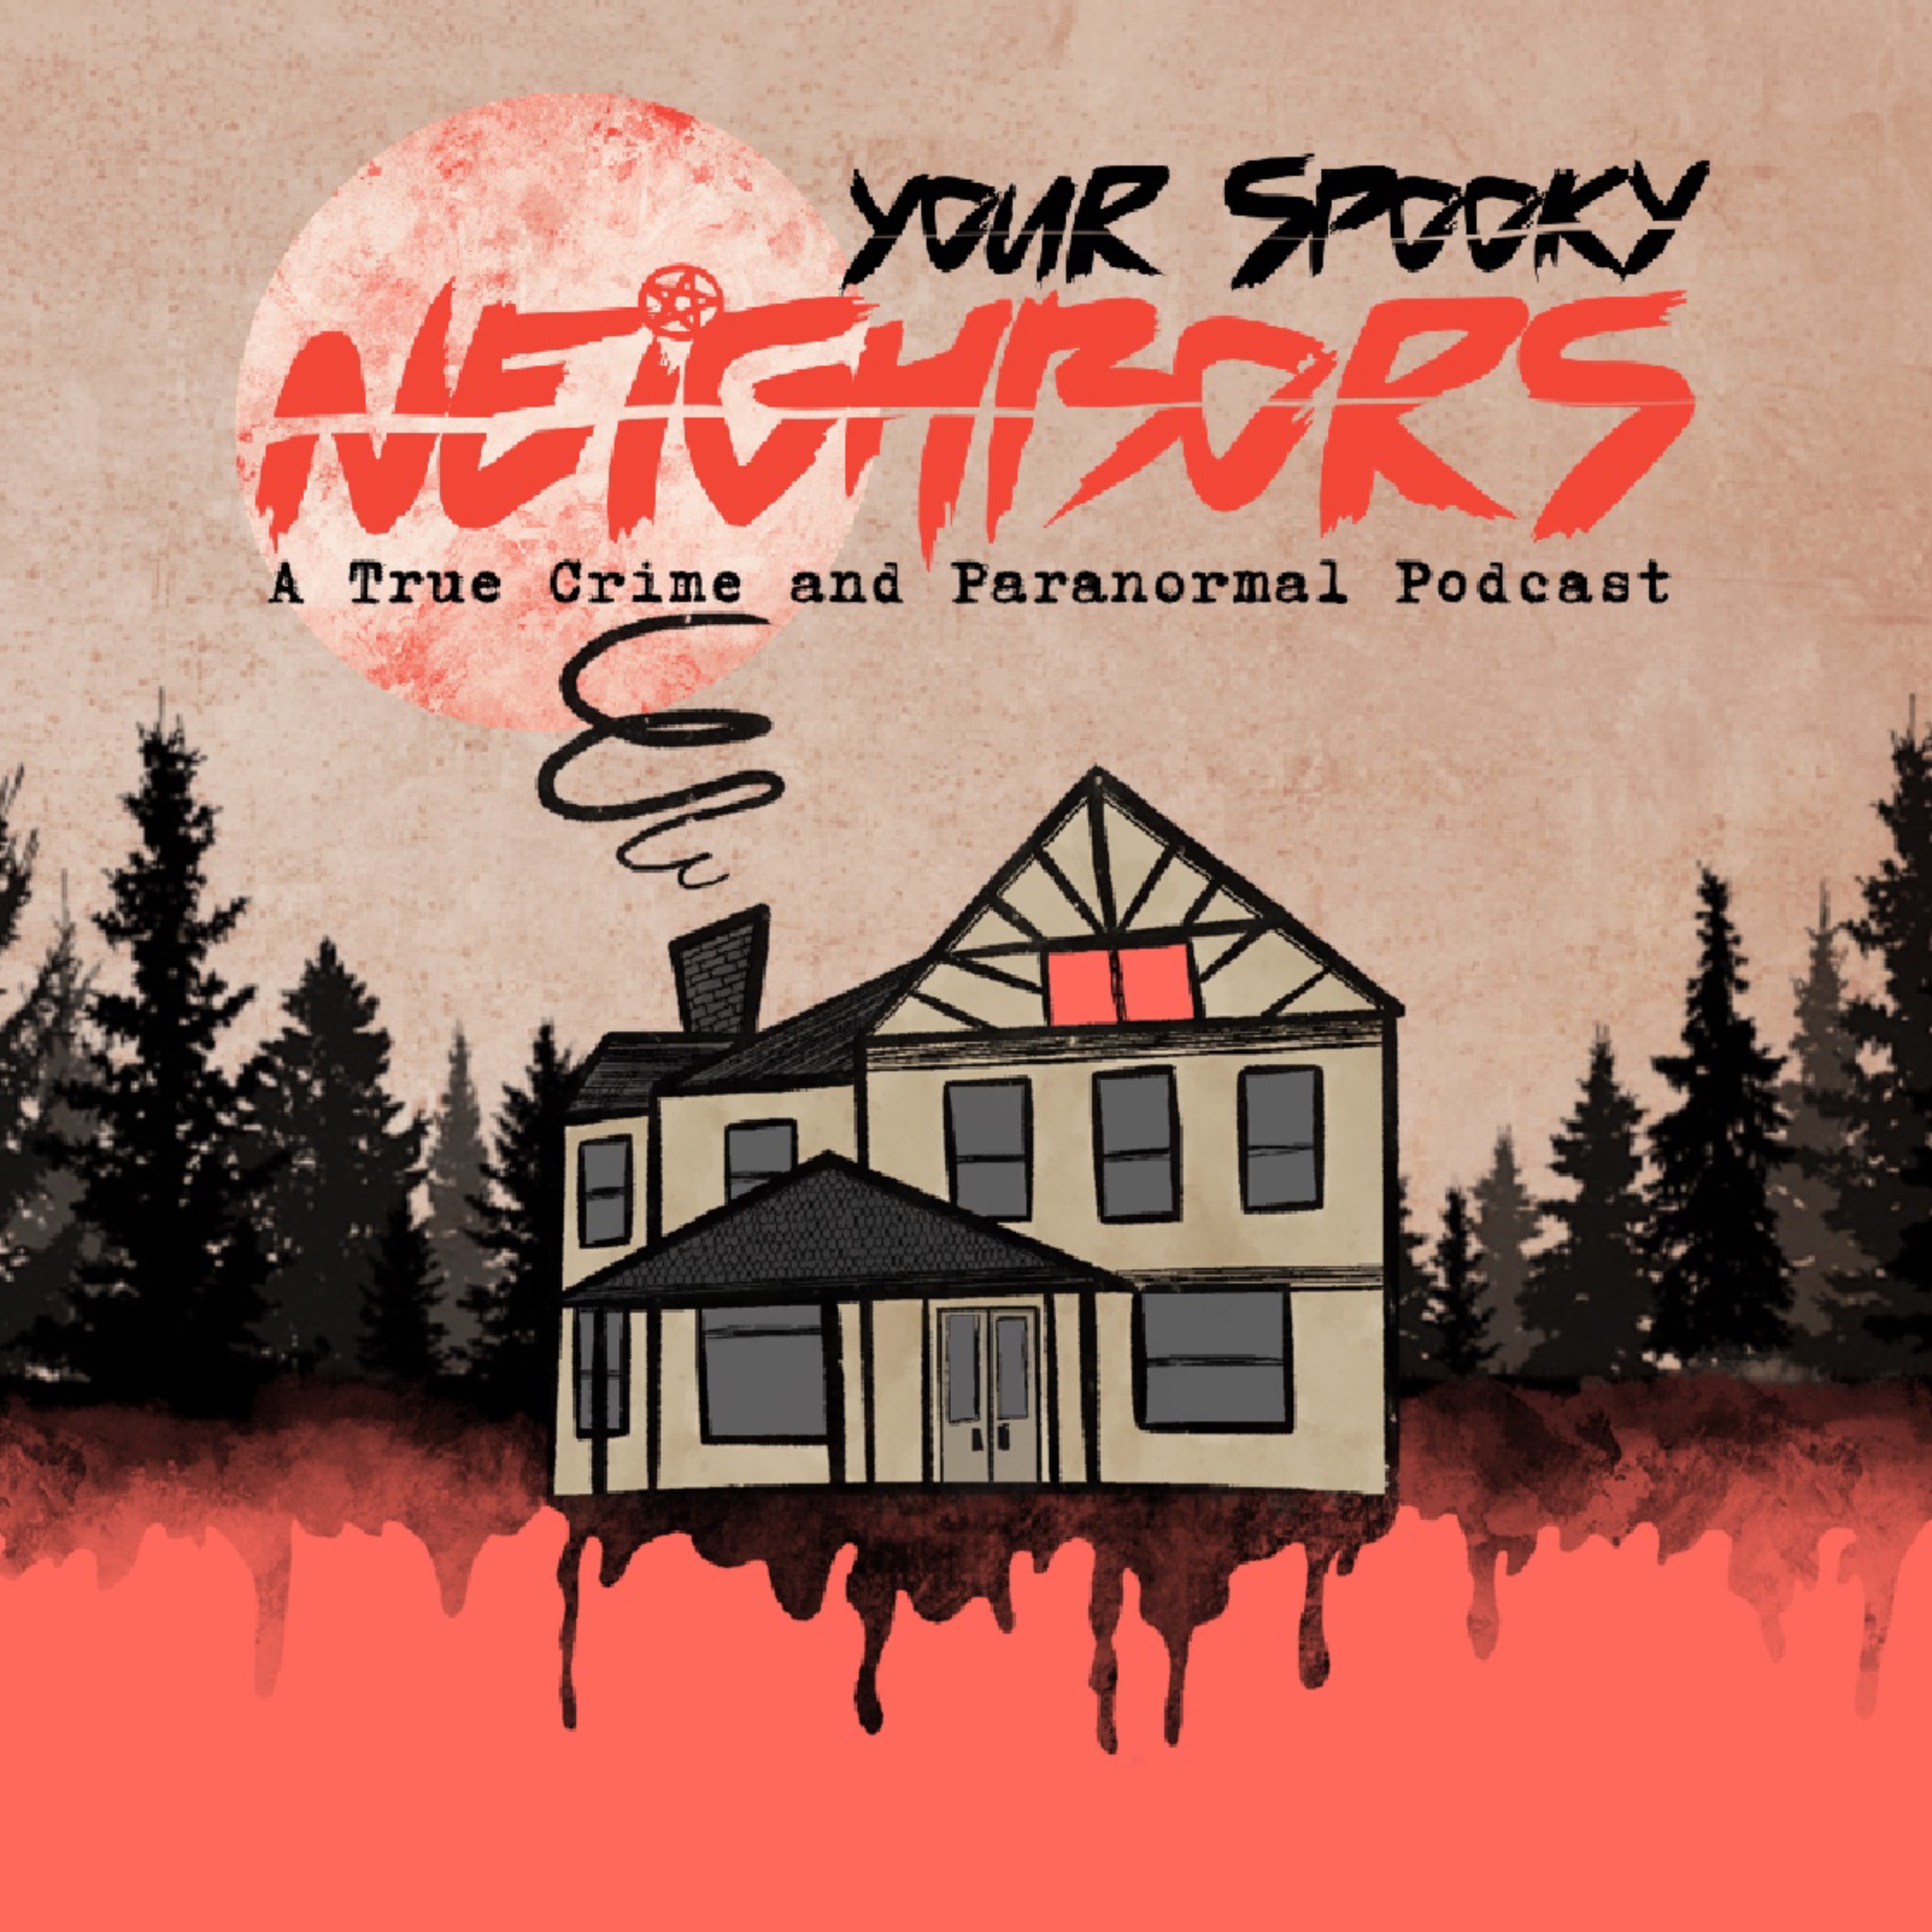 Your Spooky Neighbors